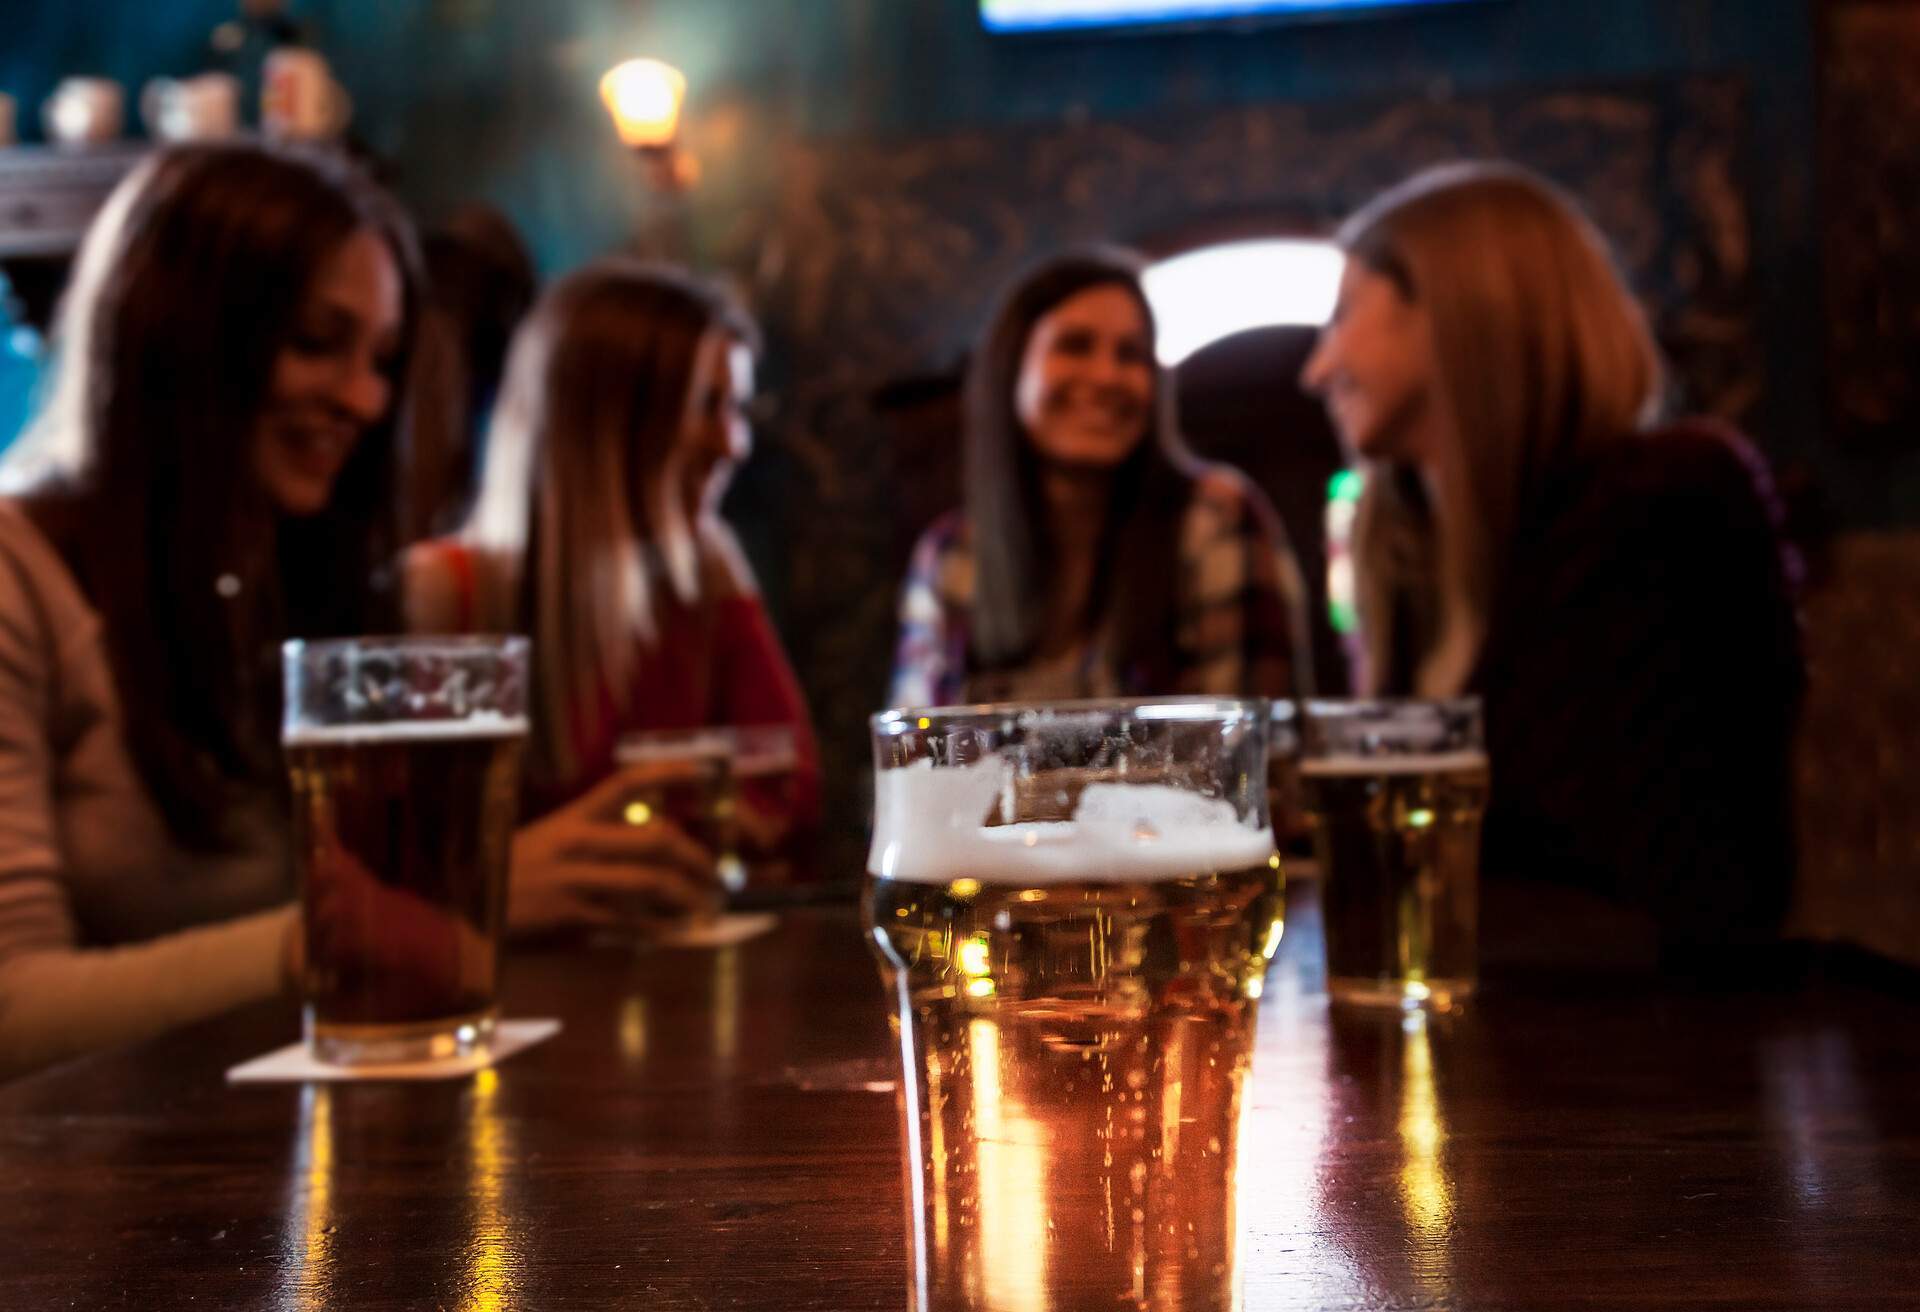 Group of millennial women having fun drinking beer in a pub.